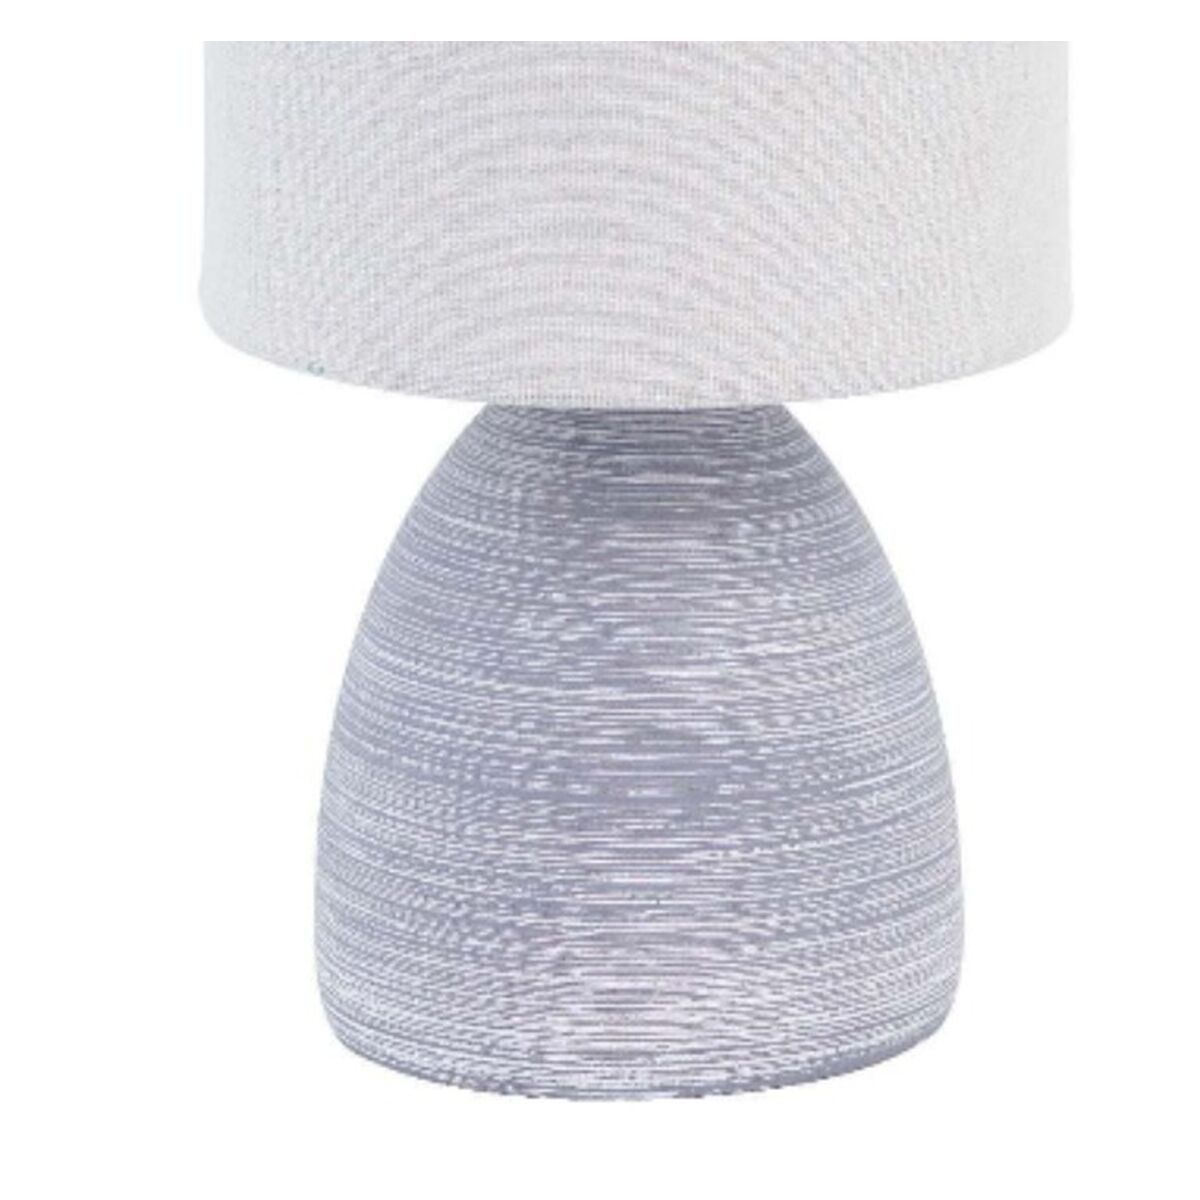 Table lamp Versa light grey ceramic